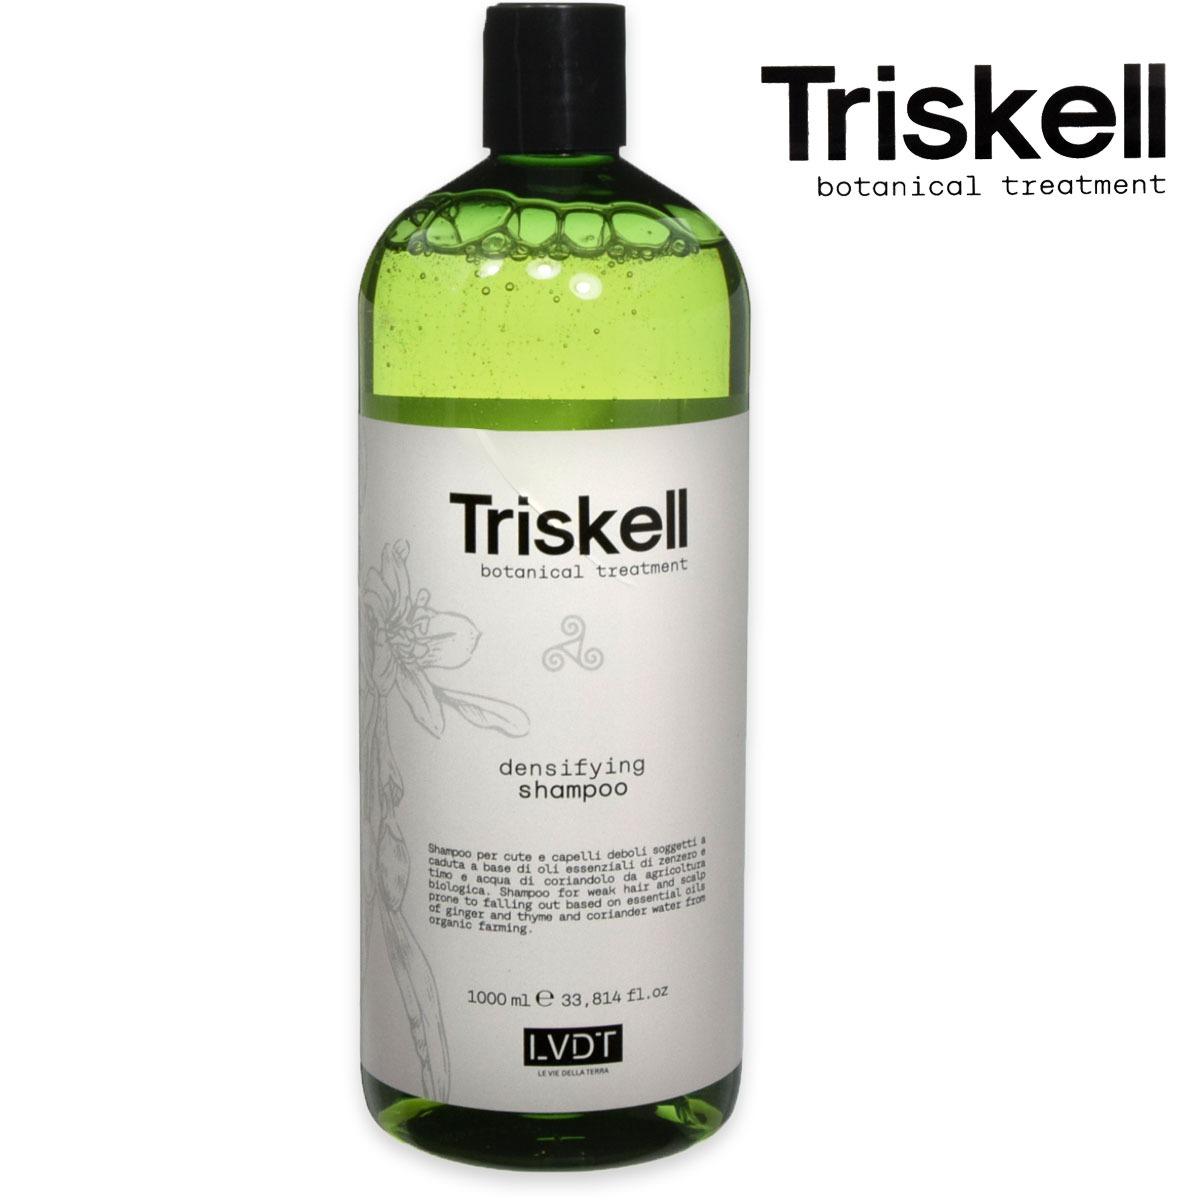 Nuova triskell treatment shampoo densifying 1000 ml